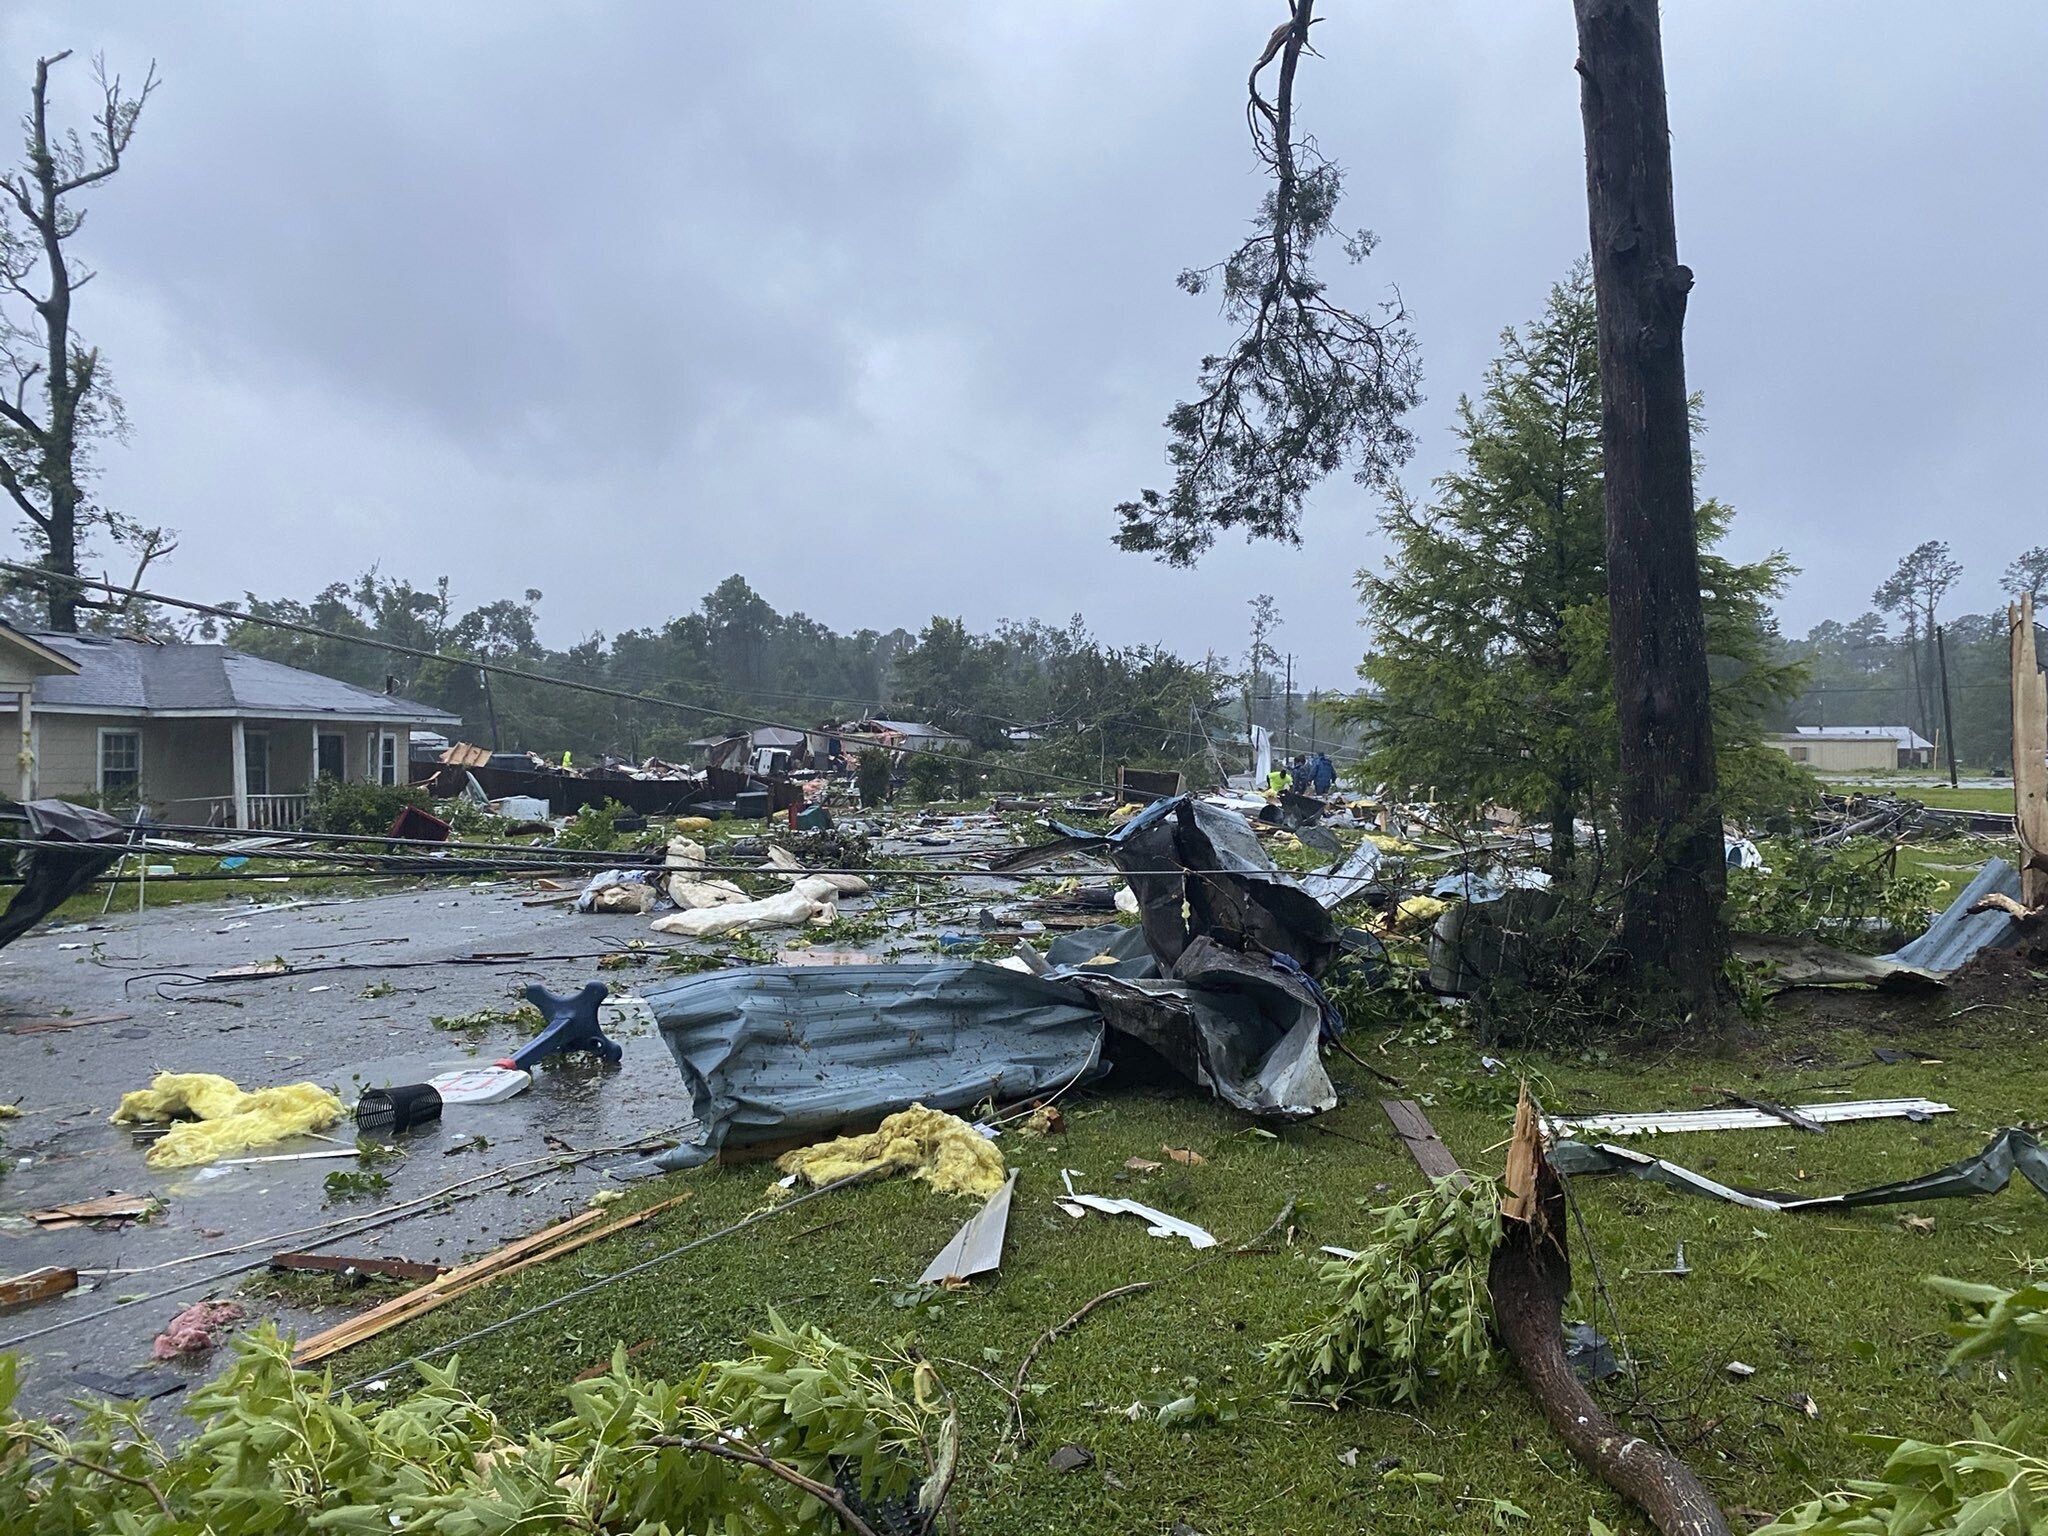 Major damage to Alabama mobile home park amid tropical storm The Boston Globe